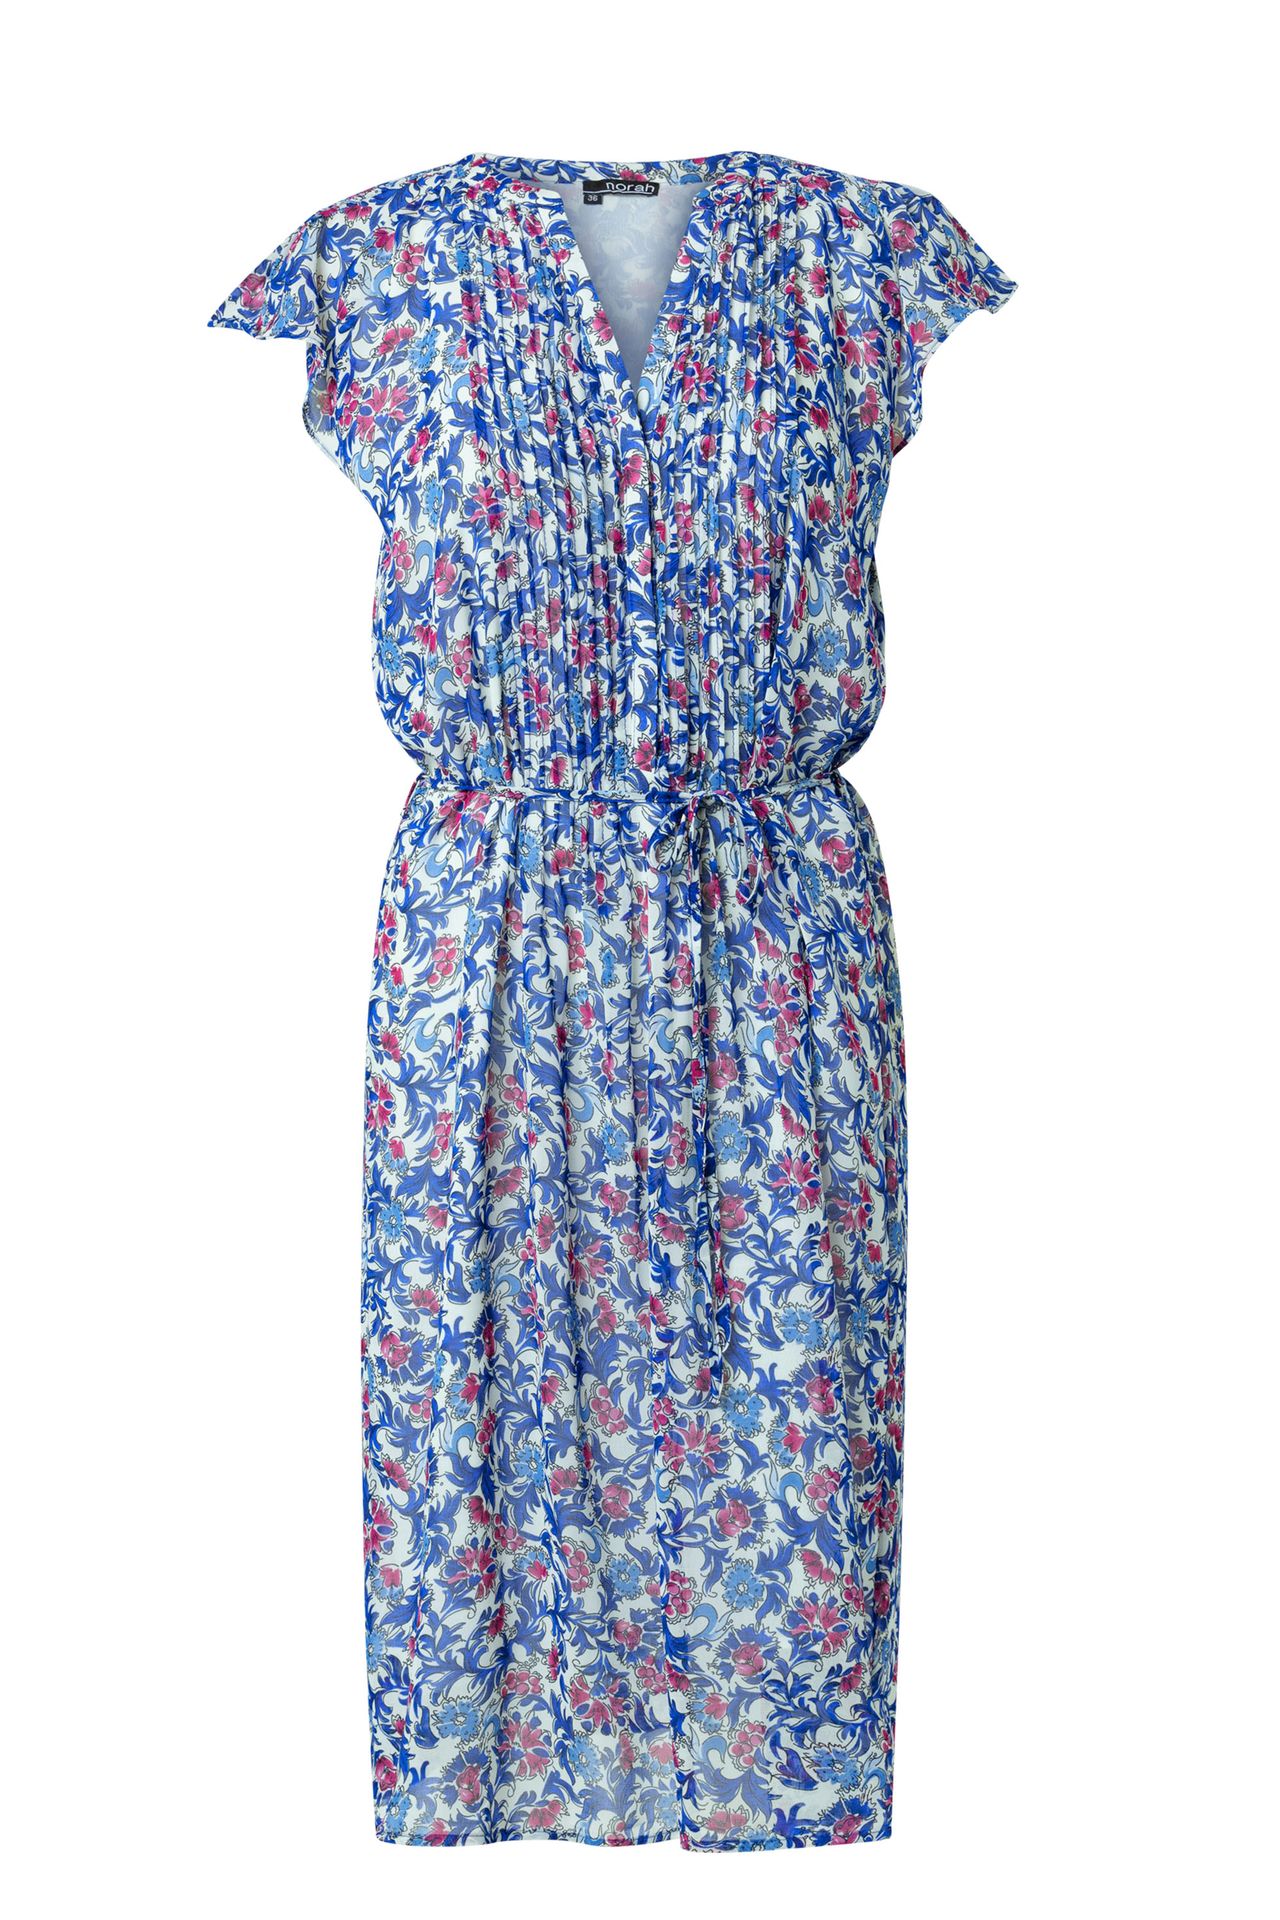 Norah Midi jurk blauw blue/pink 213828-439